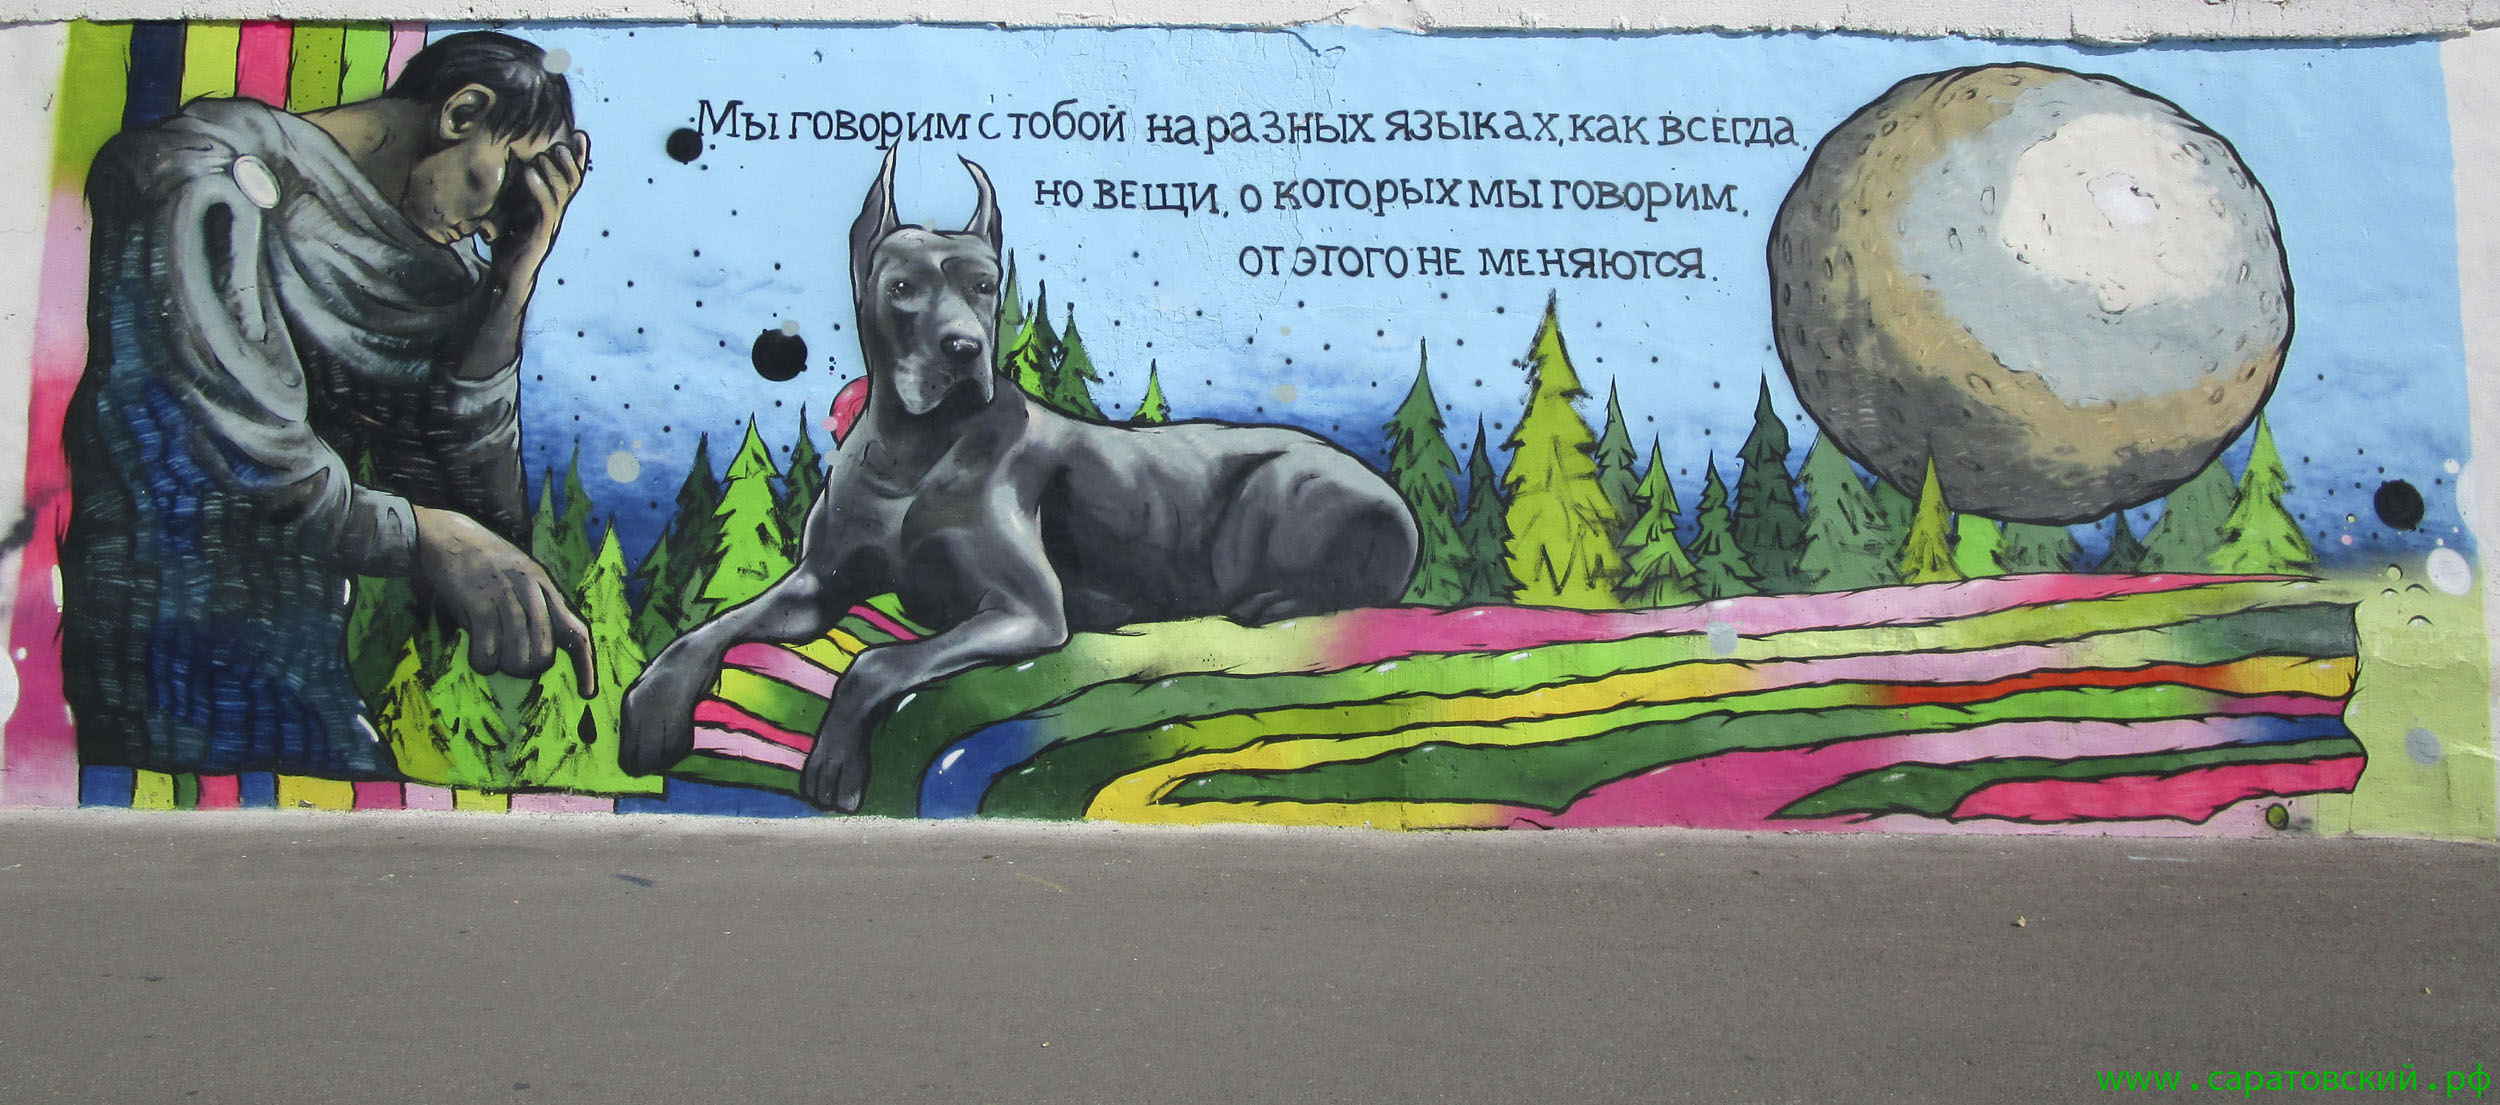 Saratov quayside graffiti: 'The Master and Margarita' novel by Mikhail Bulgakov and Saratov, Russia